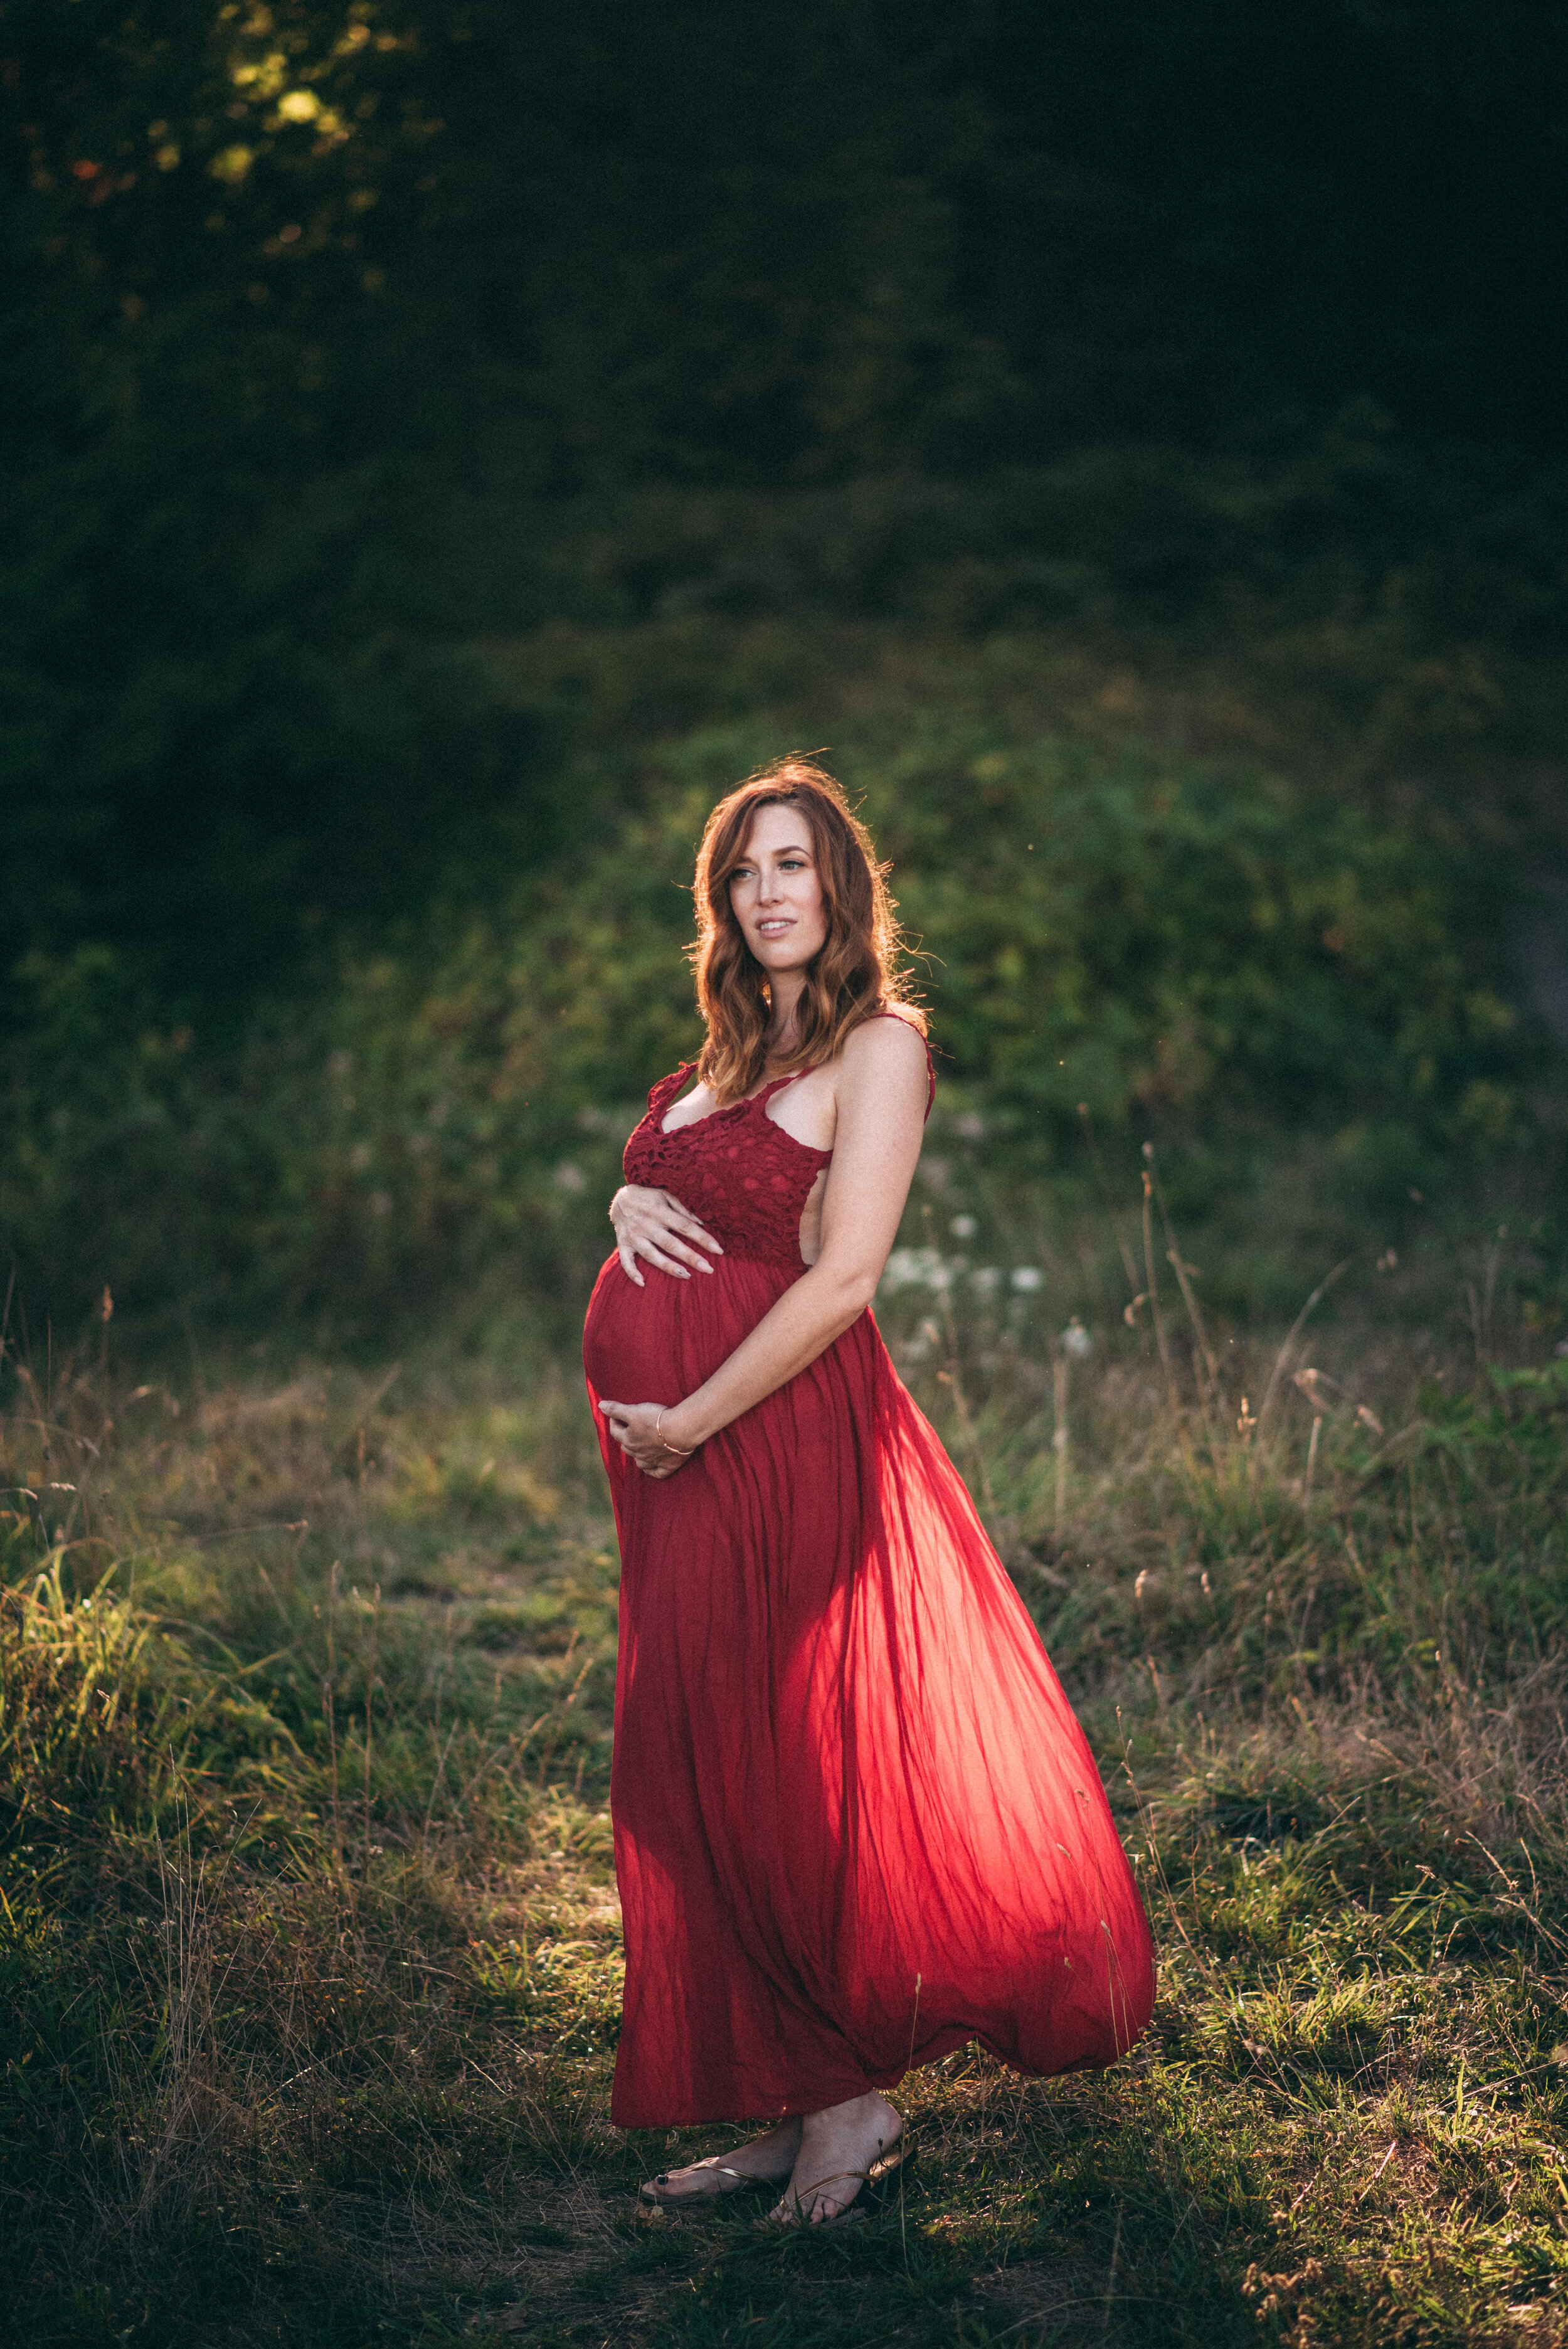 Sechelt Maternity Session - Gibsons, BC Canada - Laura Olson Photography - Sunshine Coast BC Maternity & Wedding Photographer-4130.jpg